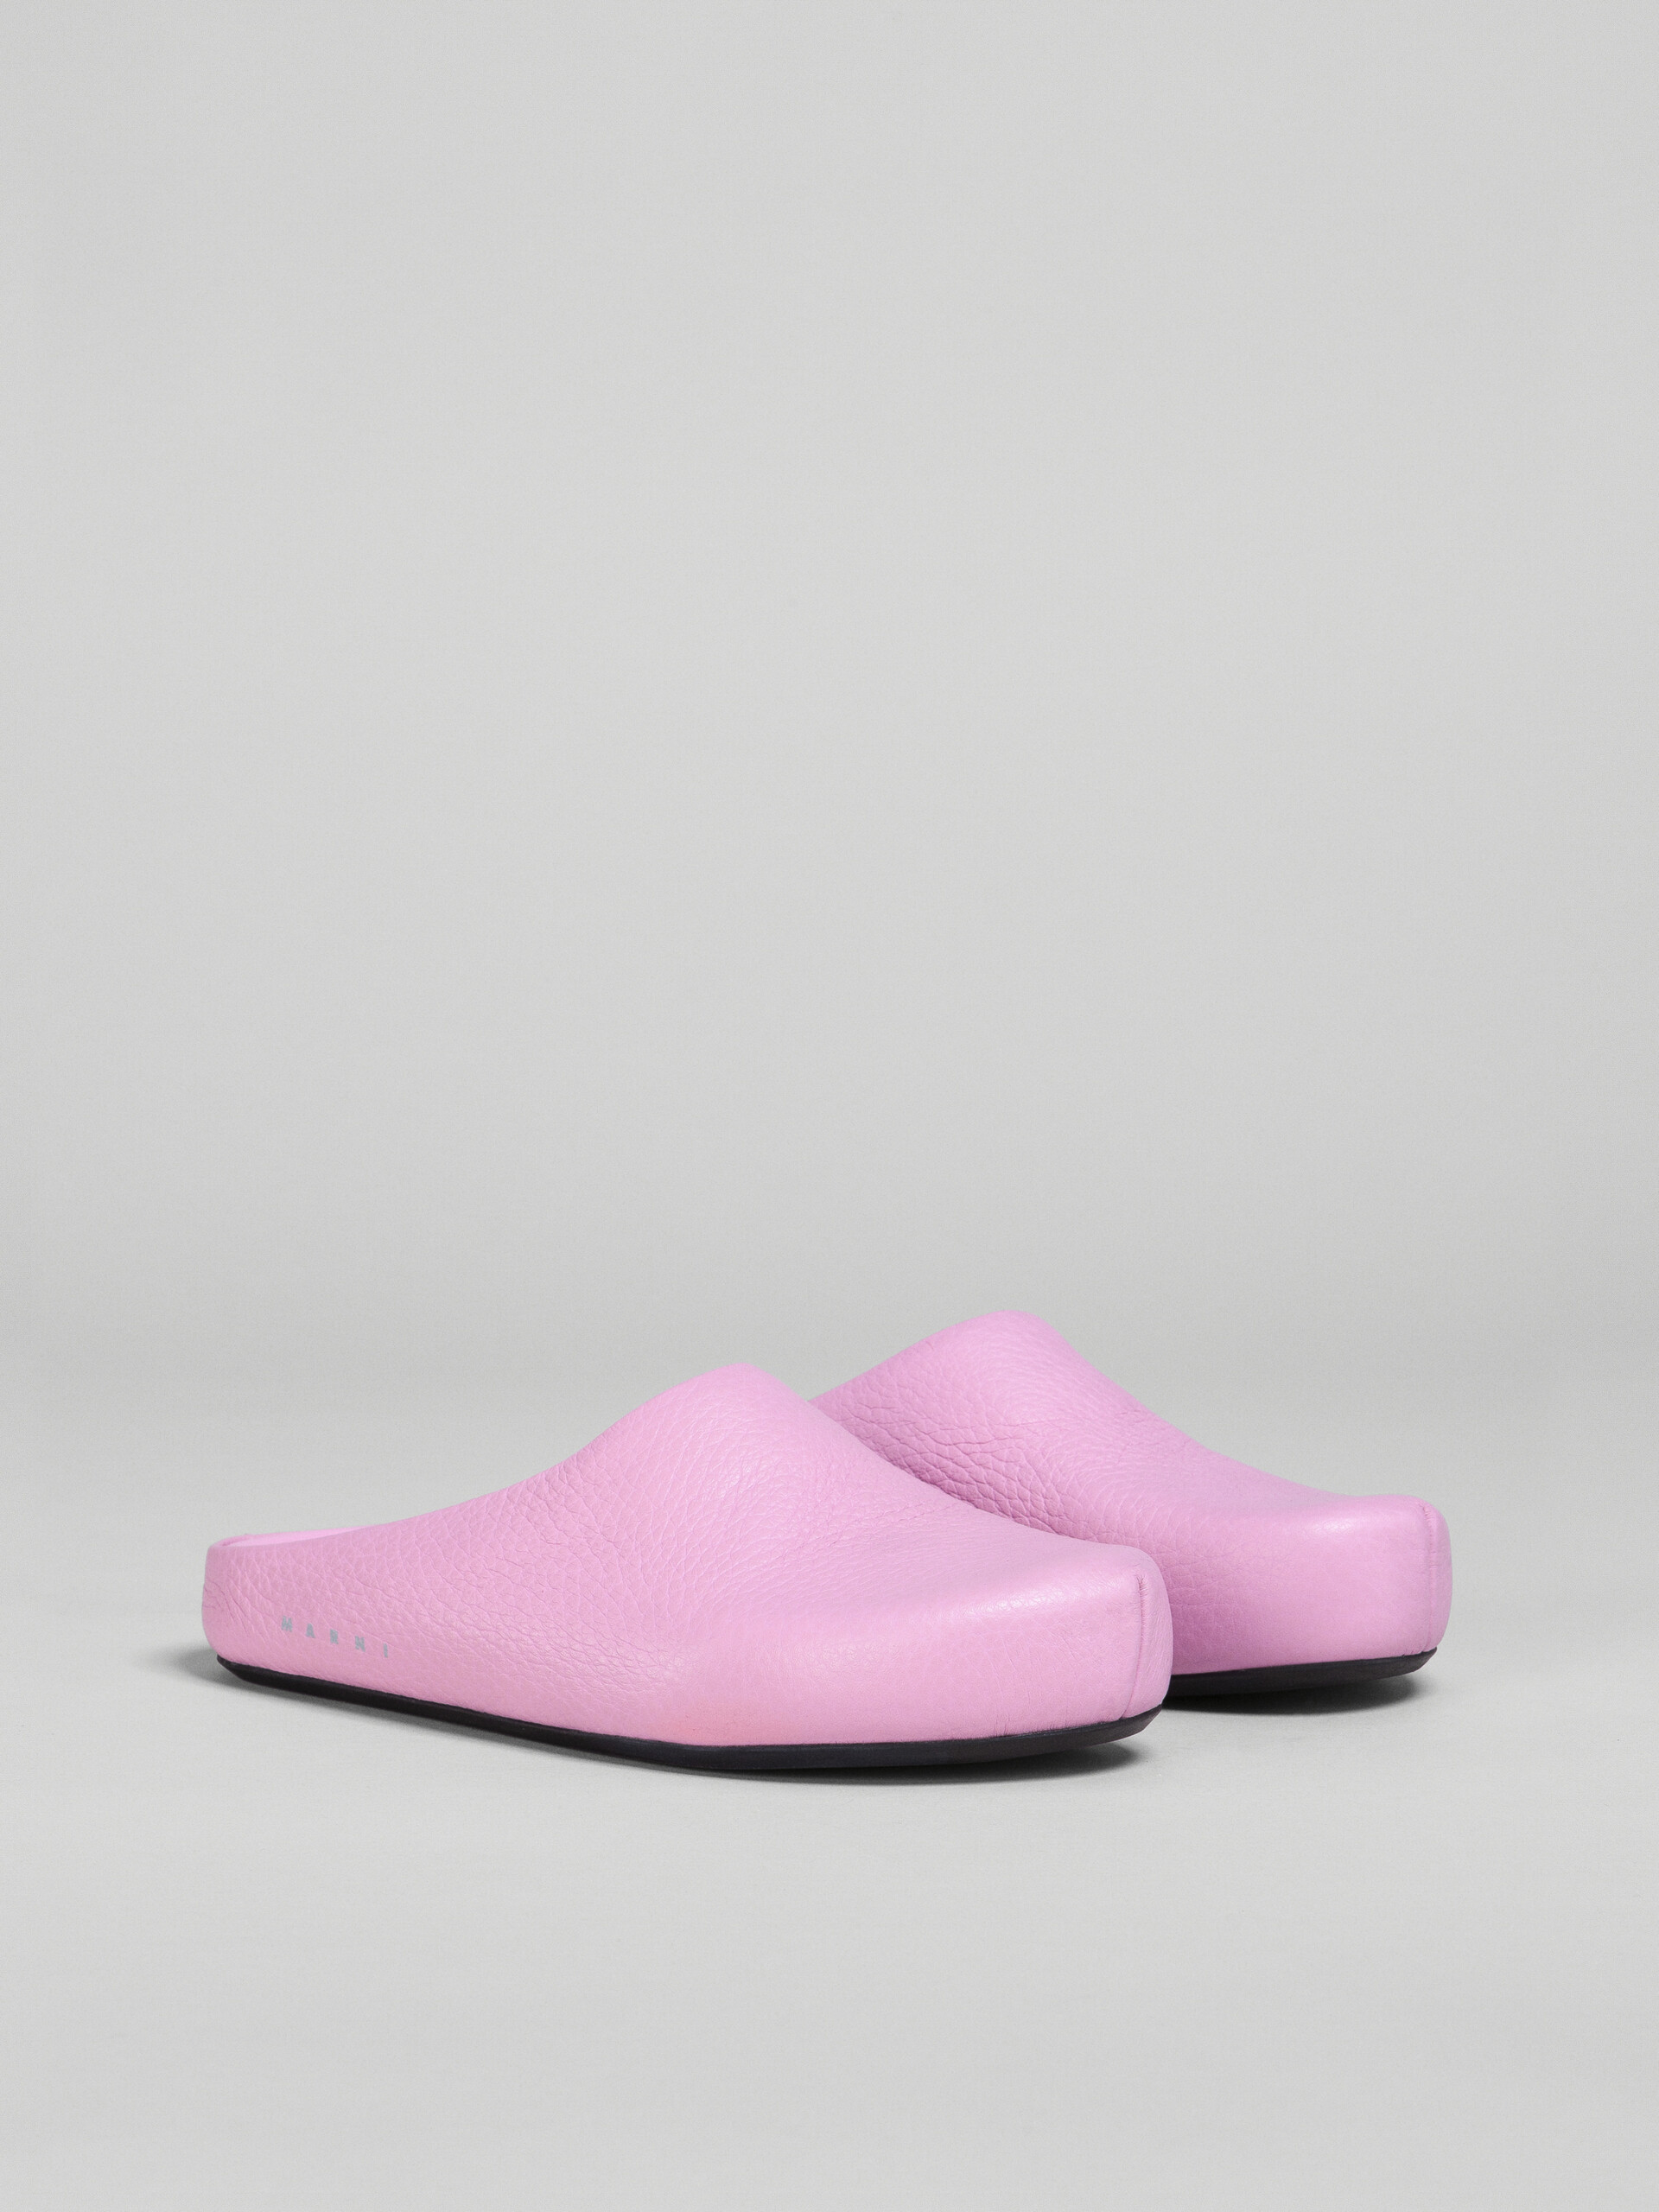 Pink leather Fussbett sabot - Clogs - Image 2